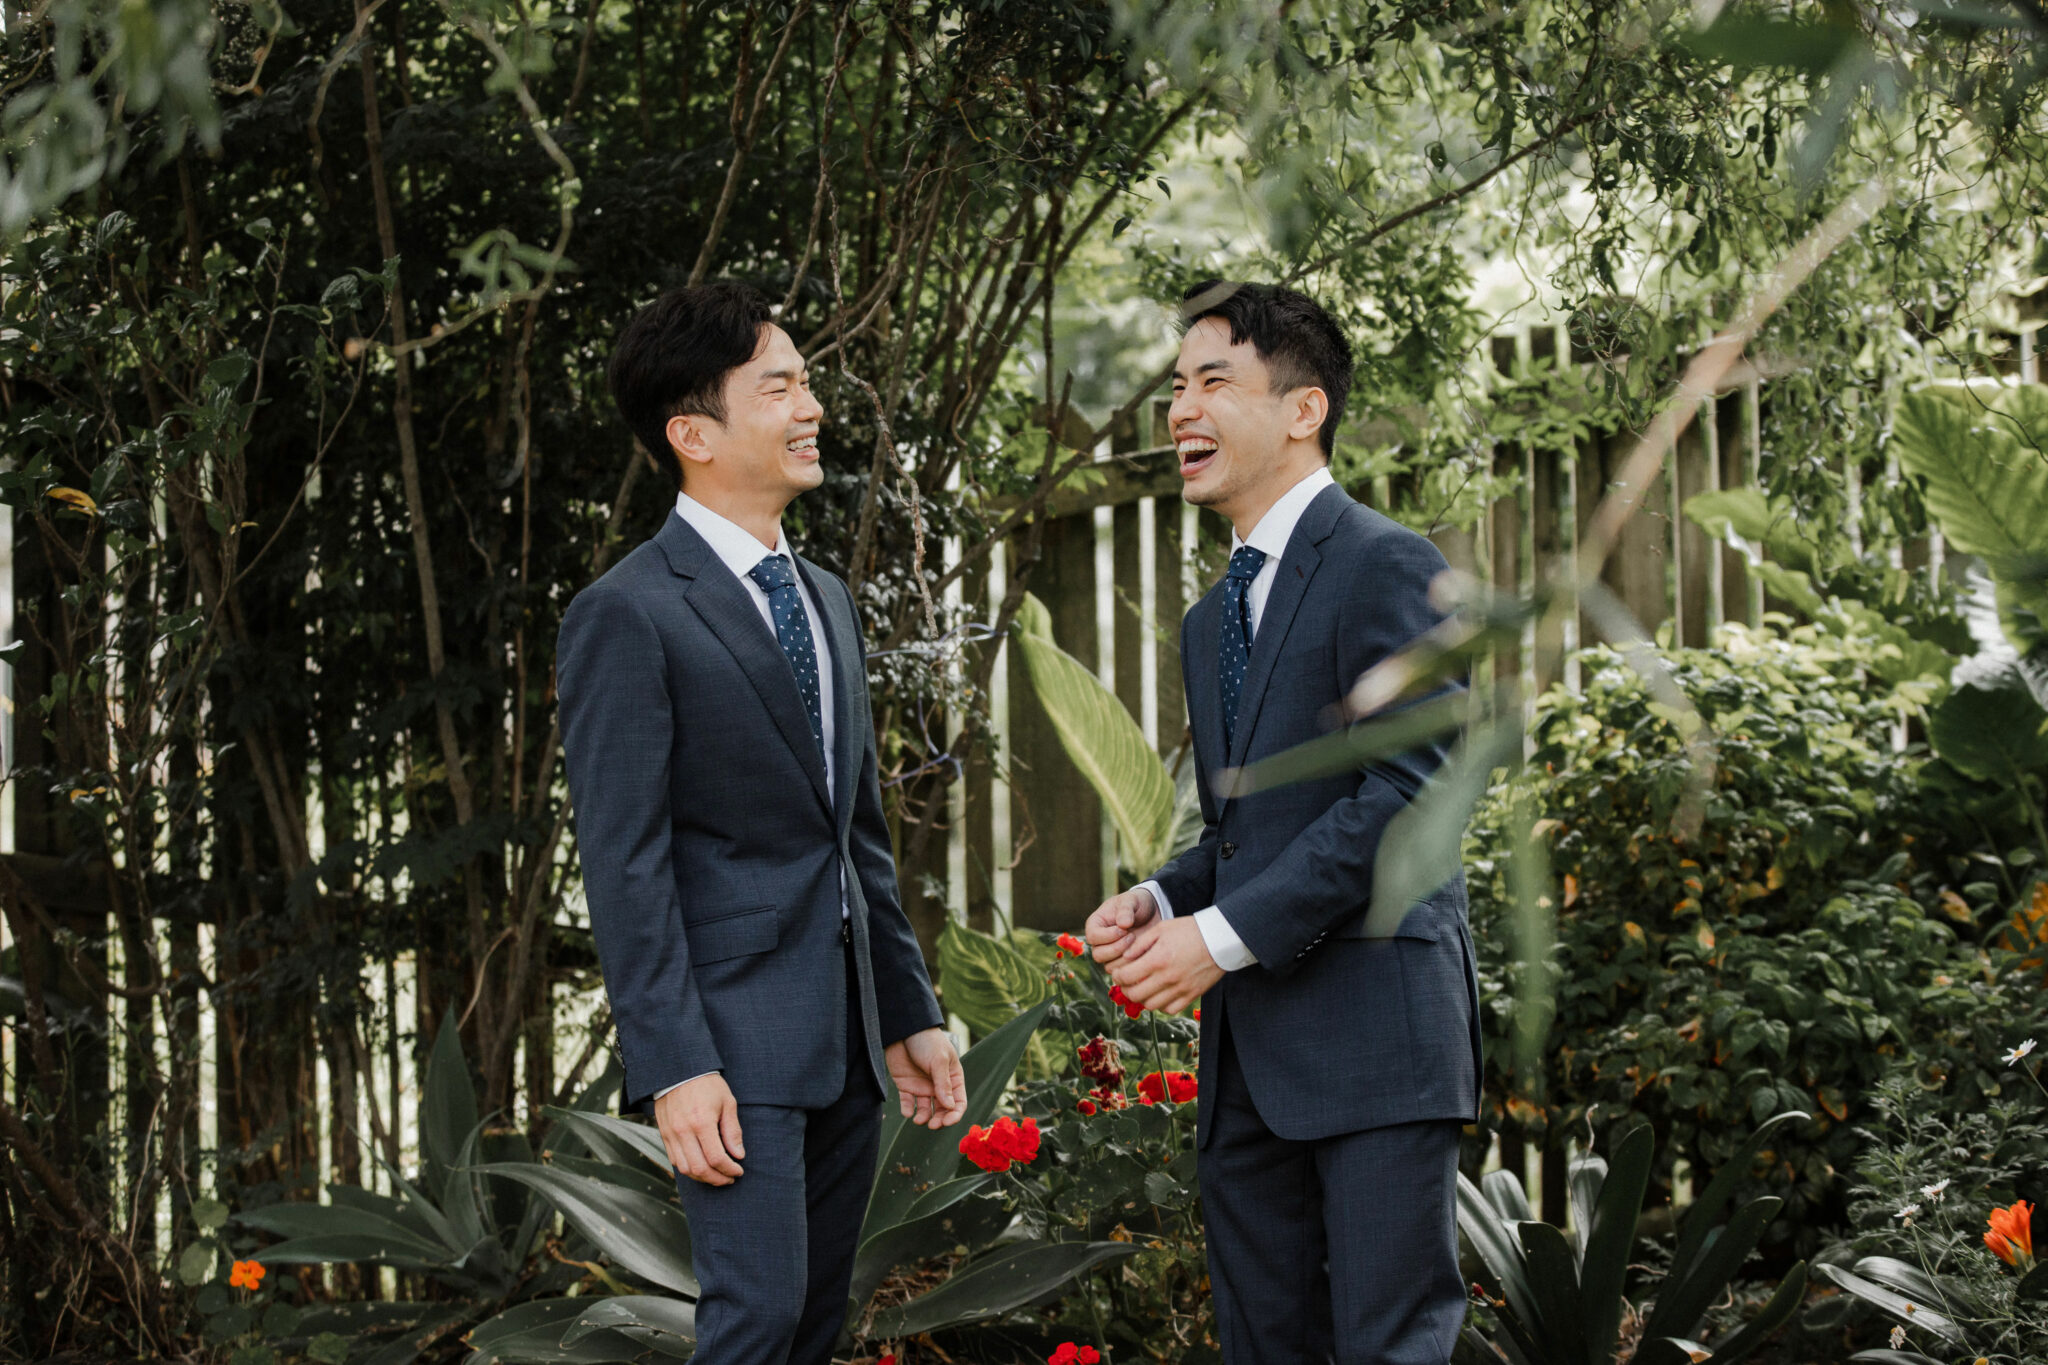 groom and groomsman having a laugh